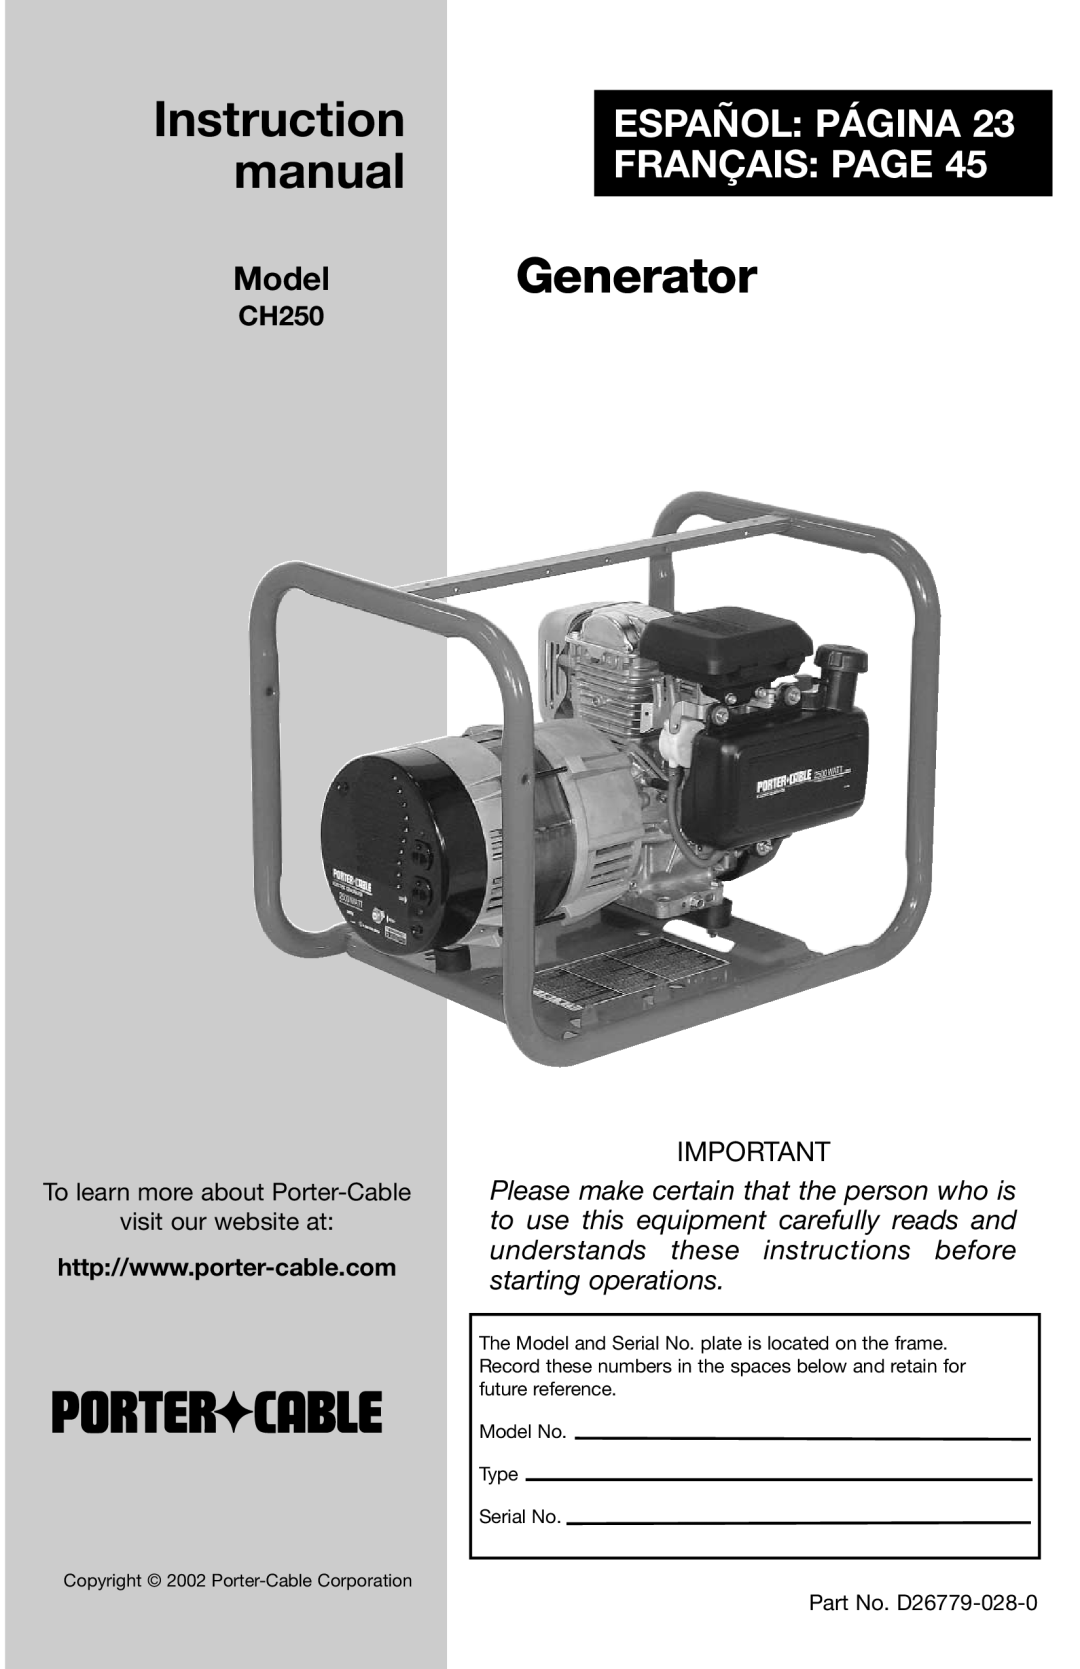 Porter-Cable D26779-028-0 instruction manual CH250, Instruction manual, Generator, Español Página Français Page, Model 